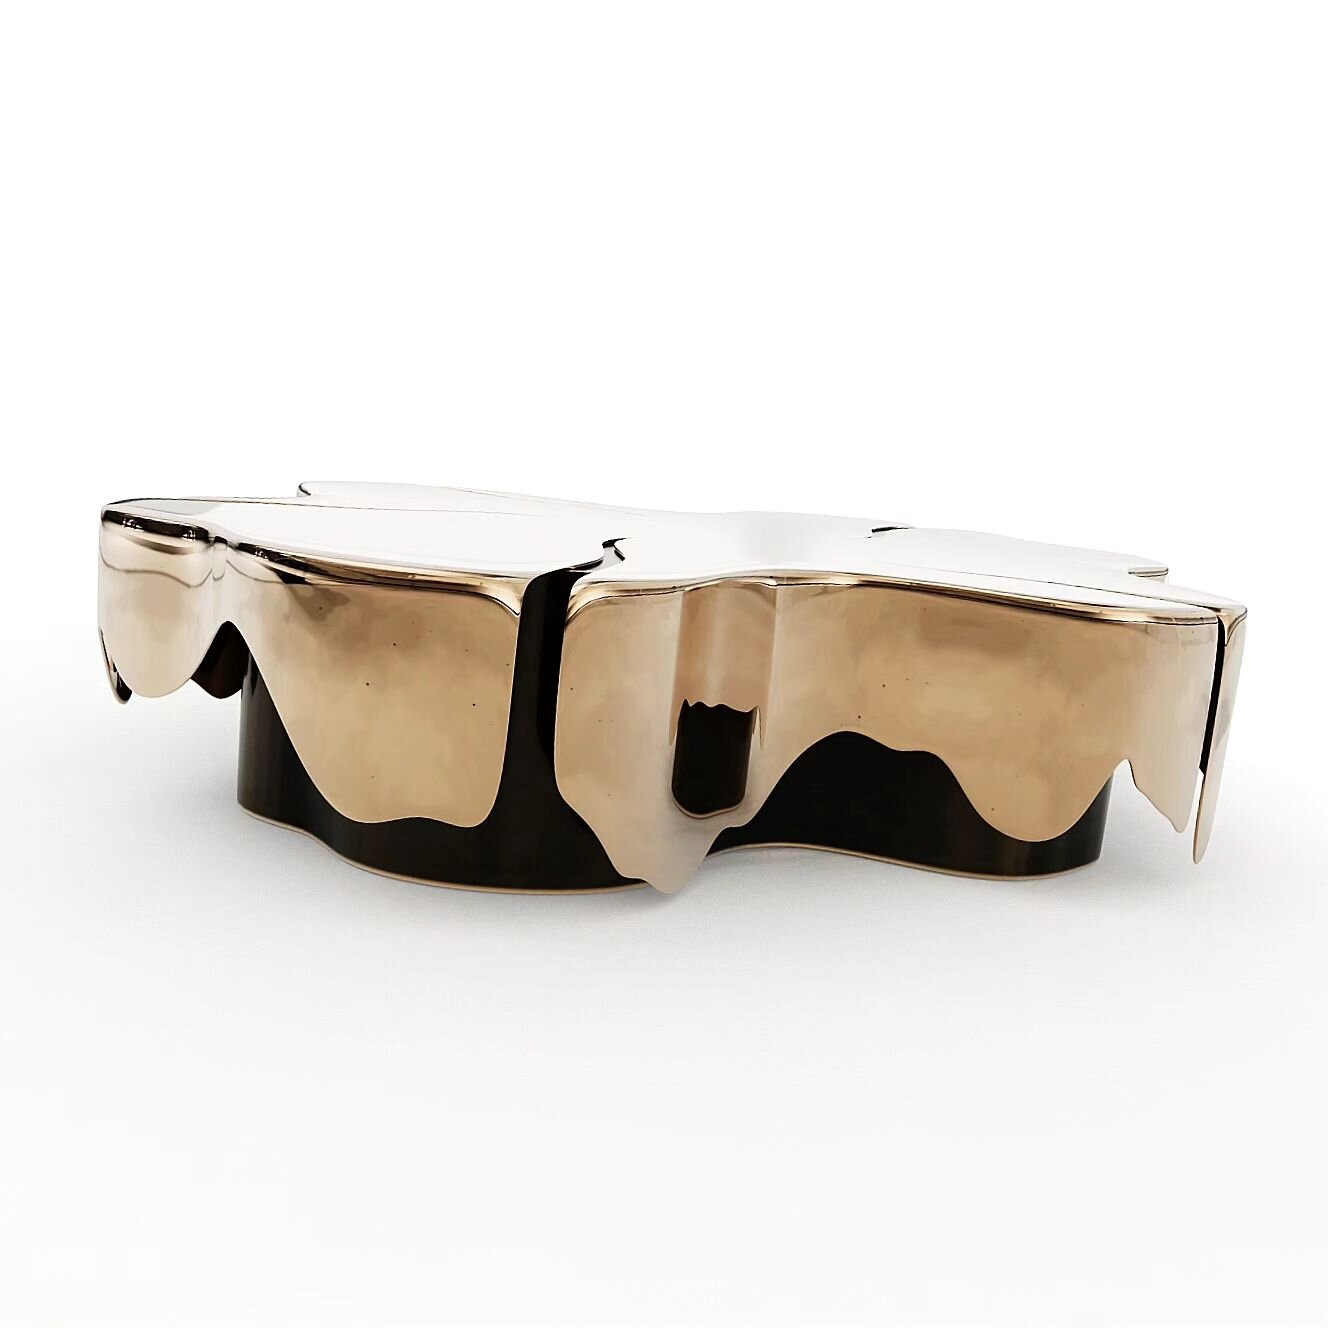 Method Table.
.
.
.
.
.
.
.

#Design_Only#polished #metal #metalart #architecture_hunter #industrialdesign #bronze #render #gold #collector #furnituredesign  #bronze #collector #limitededition #luxury #3d #architecture #sculpture #contemporaryfurnitu